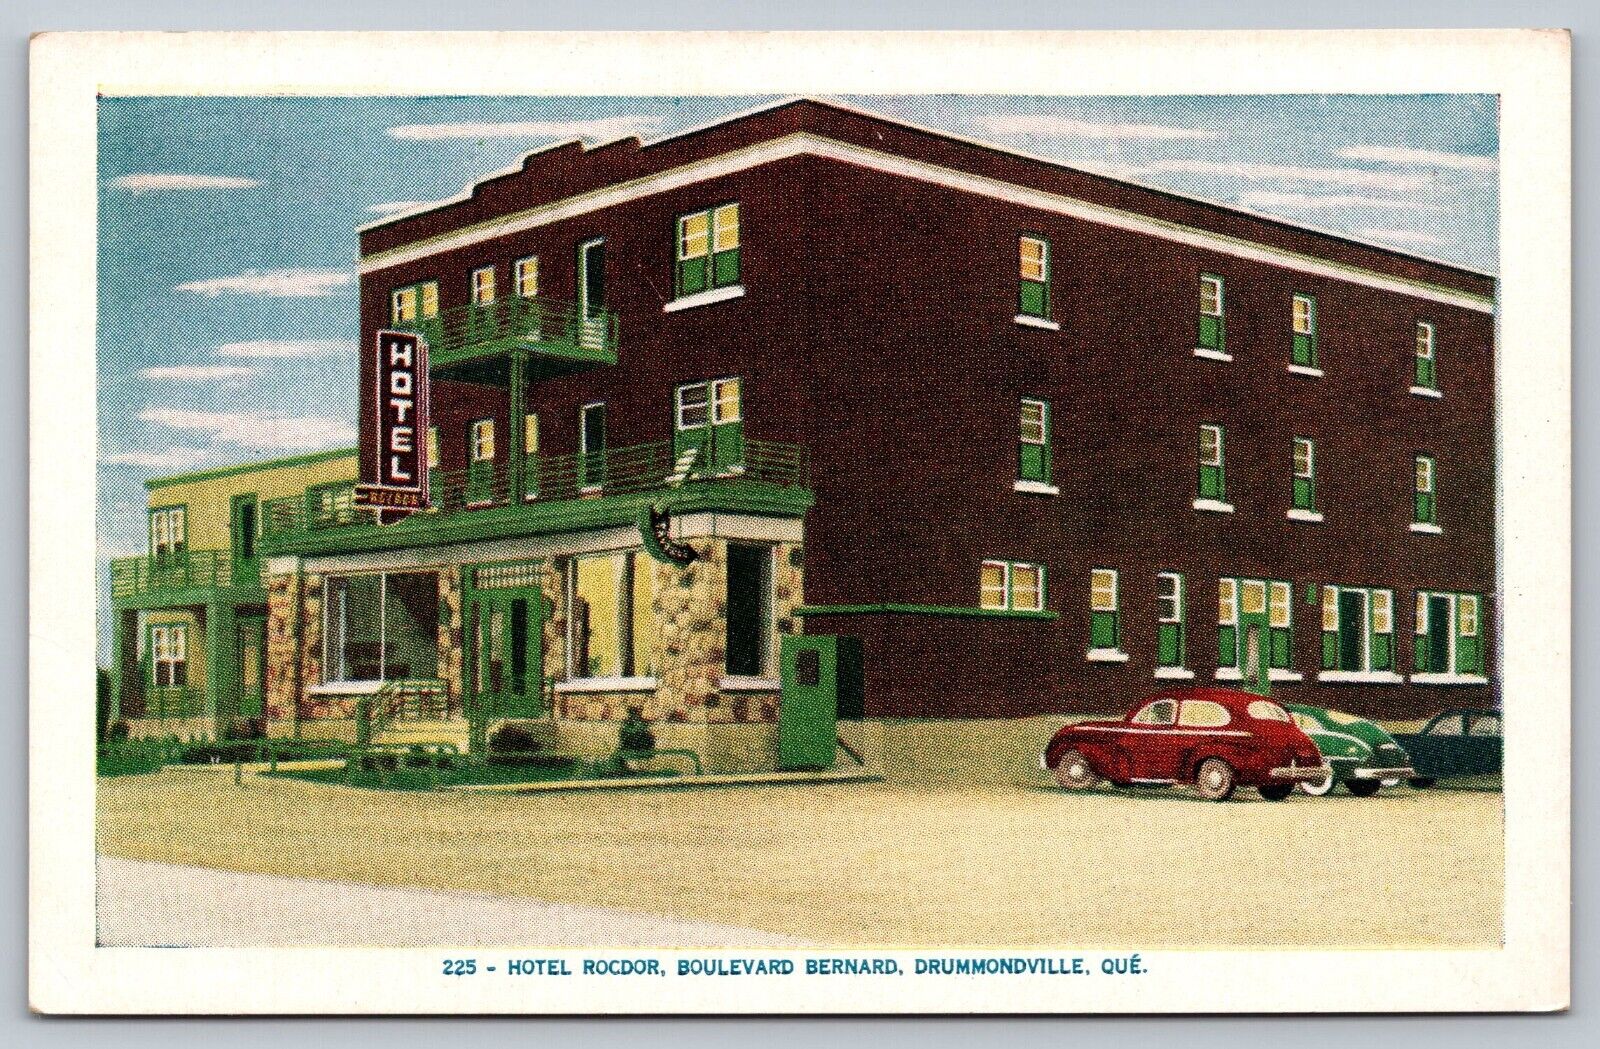 Drummondville - Quebec - Canada - Hotel Rocdor - Boulevard Bernard